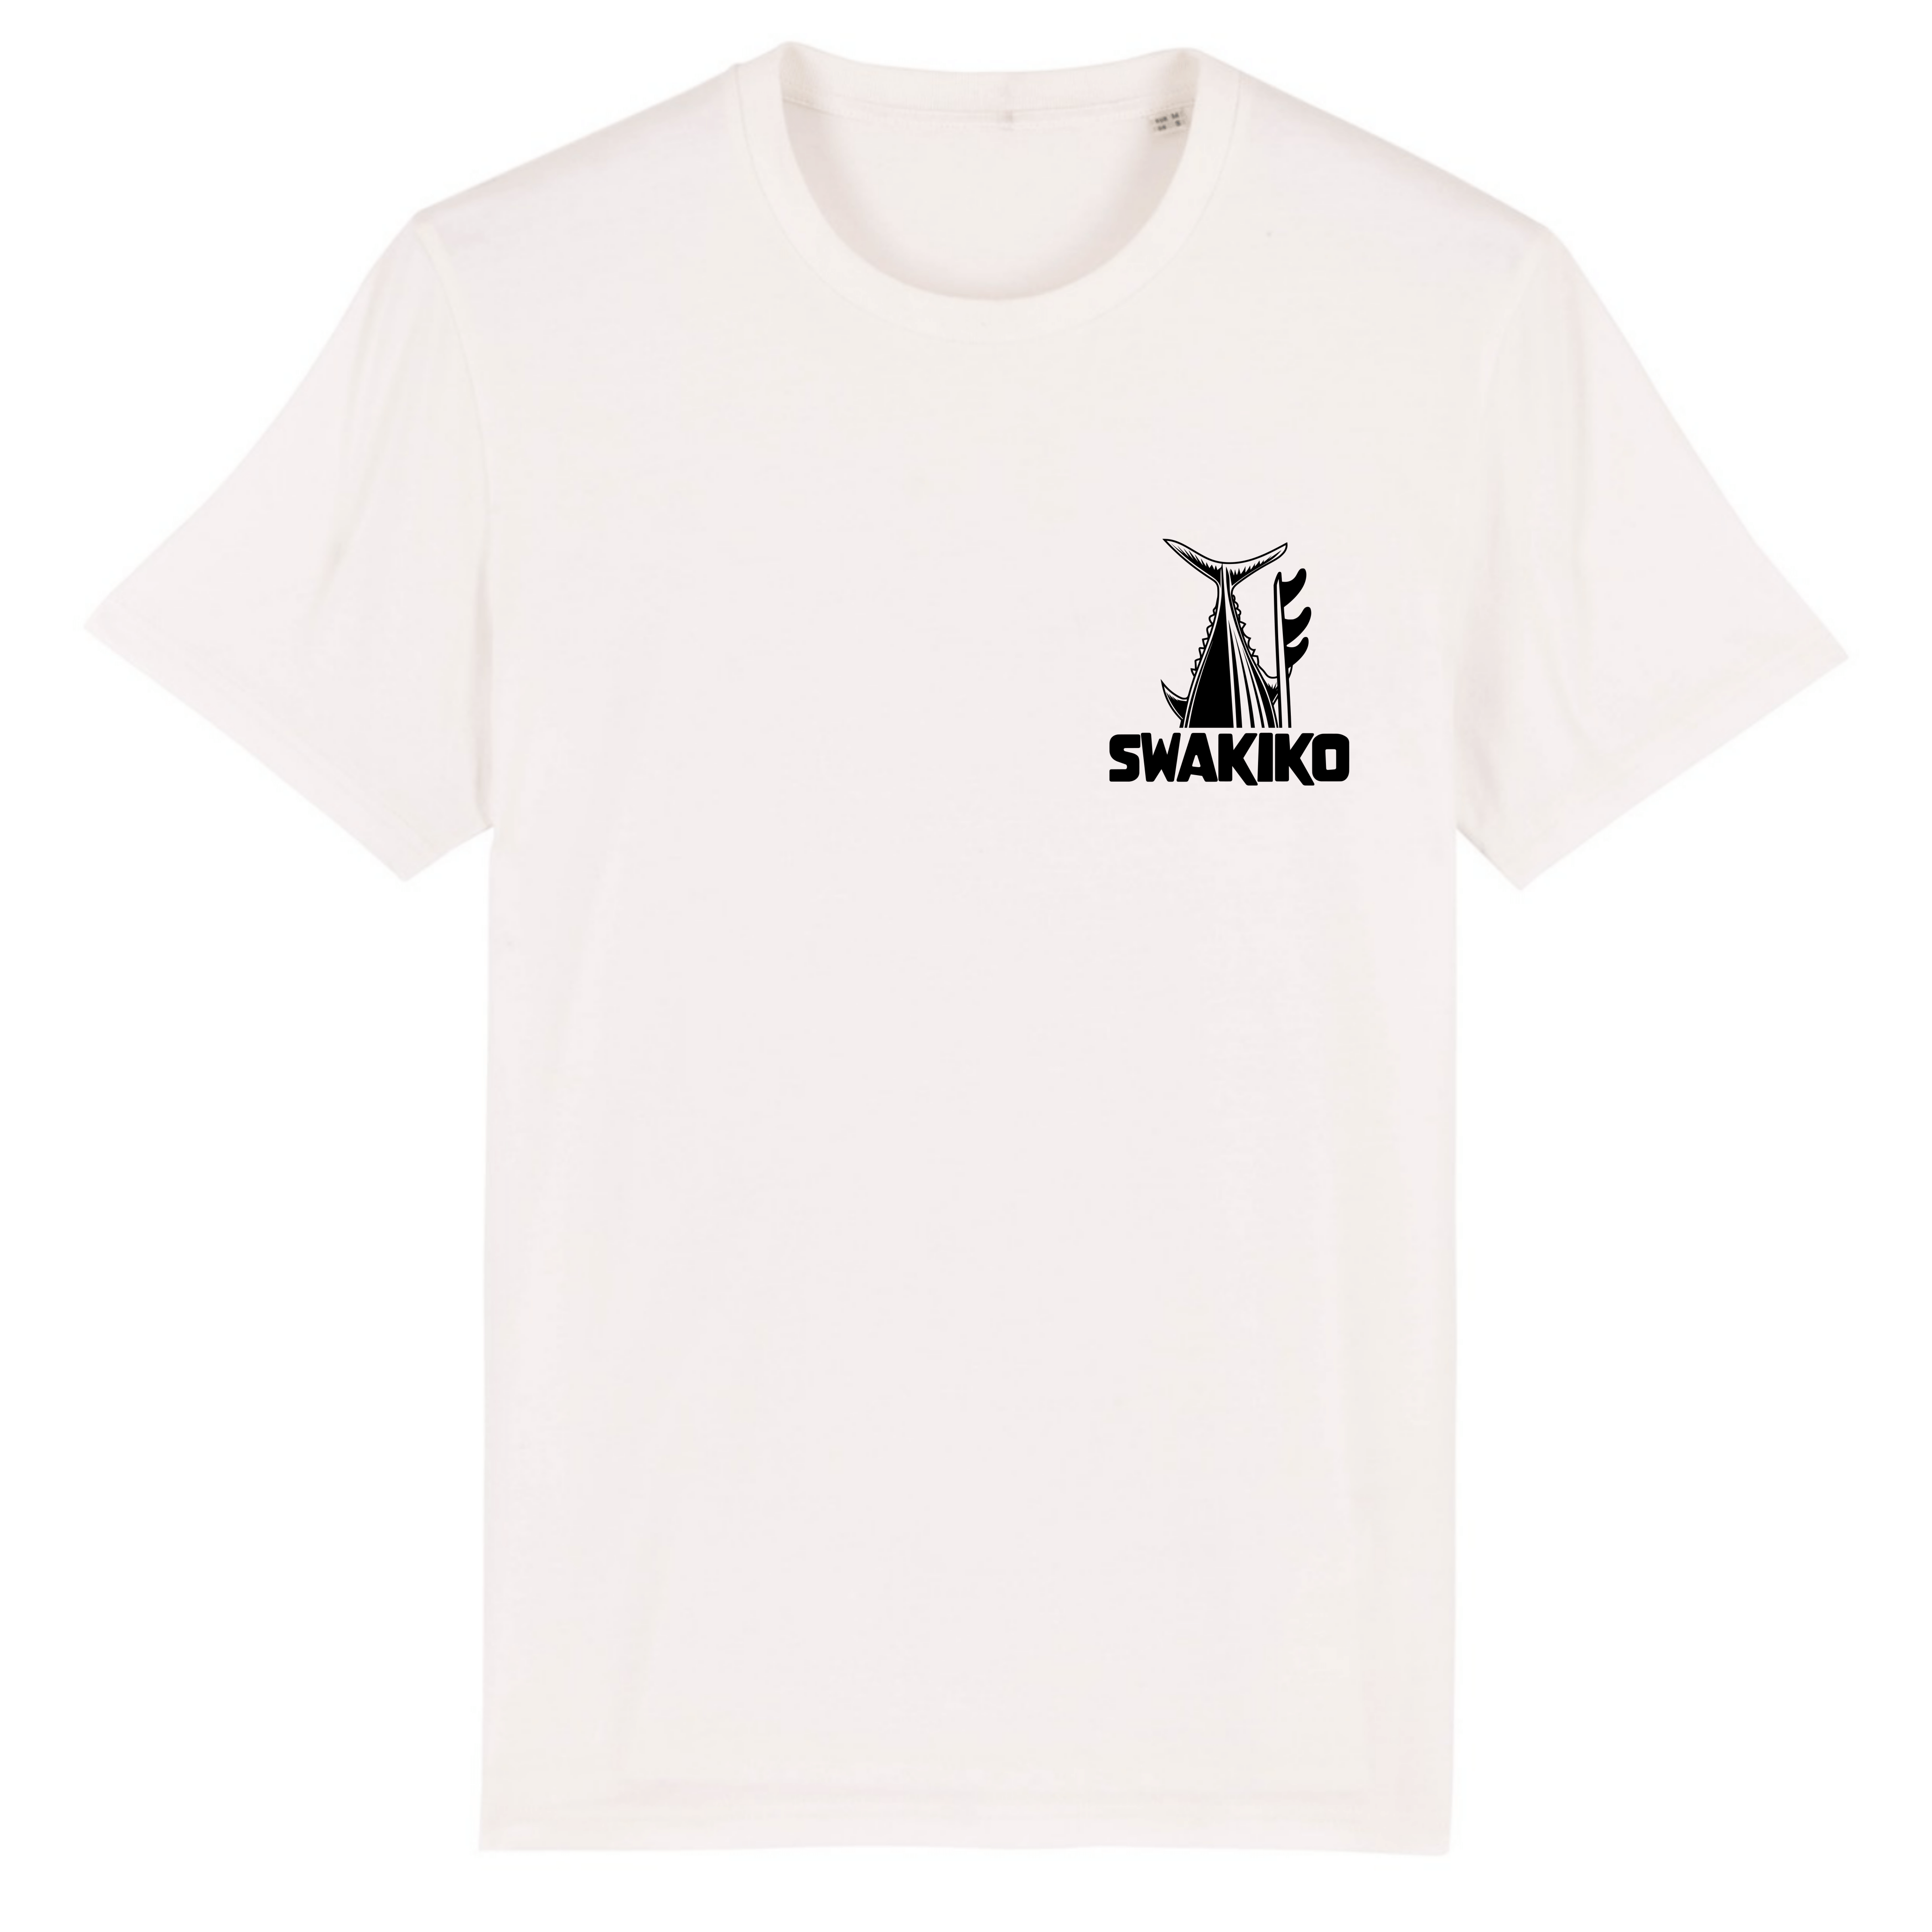 Surfing Tuna T-shirt, white front